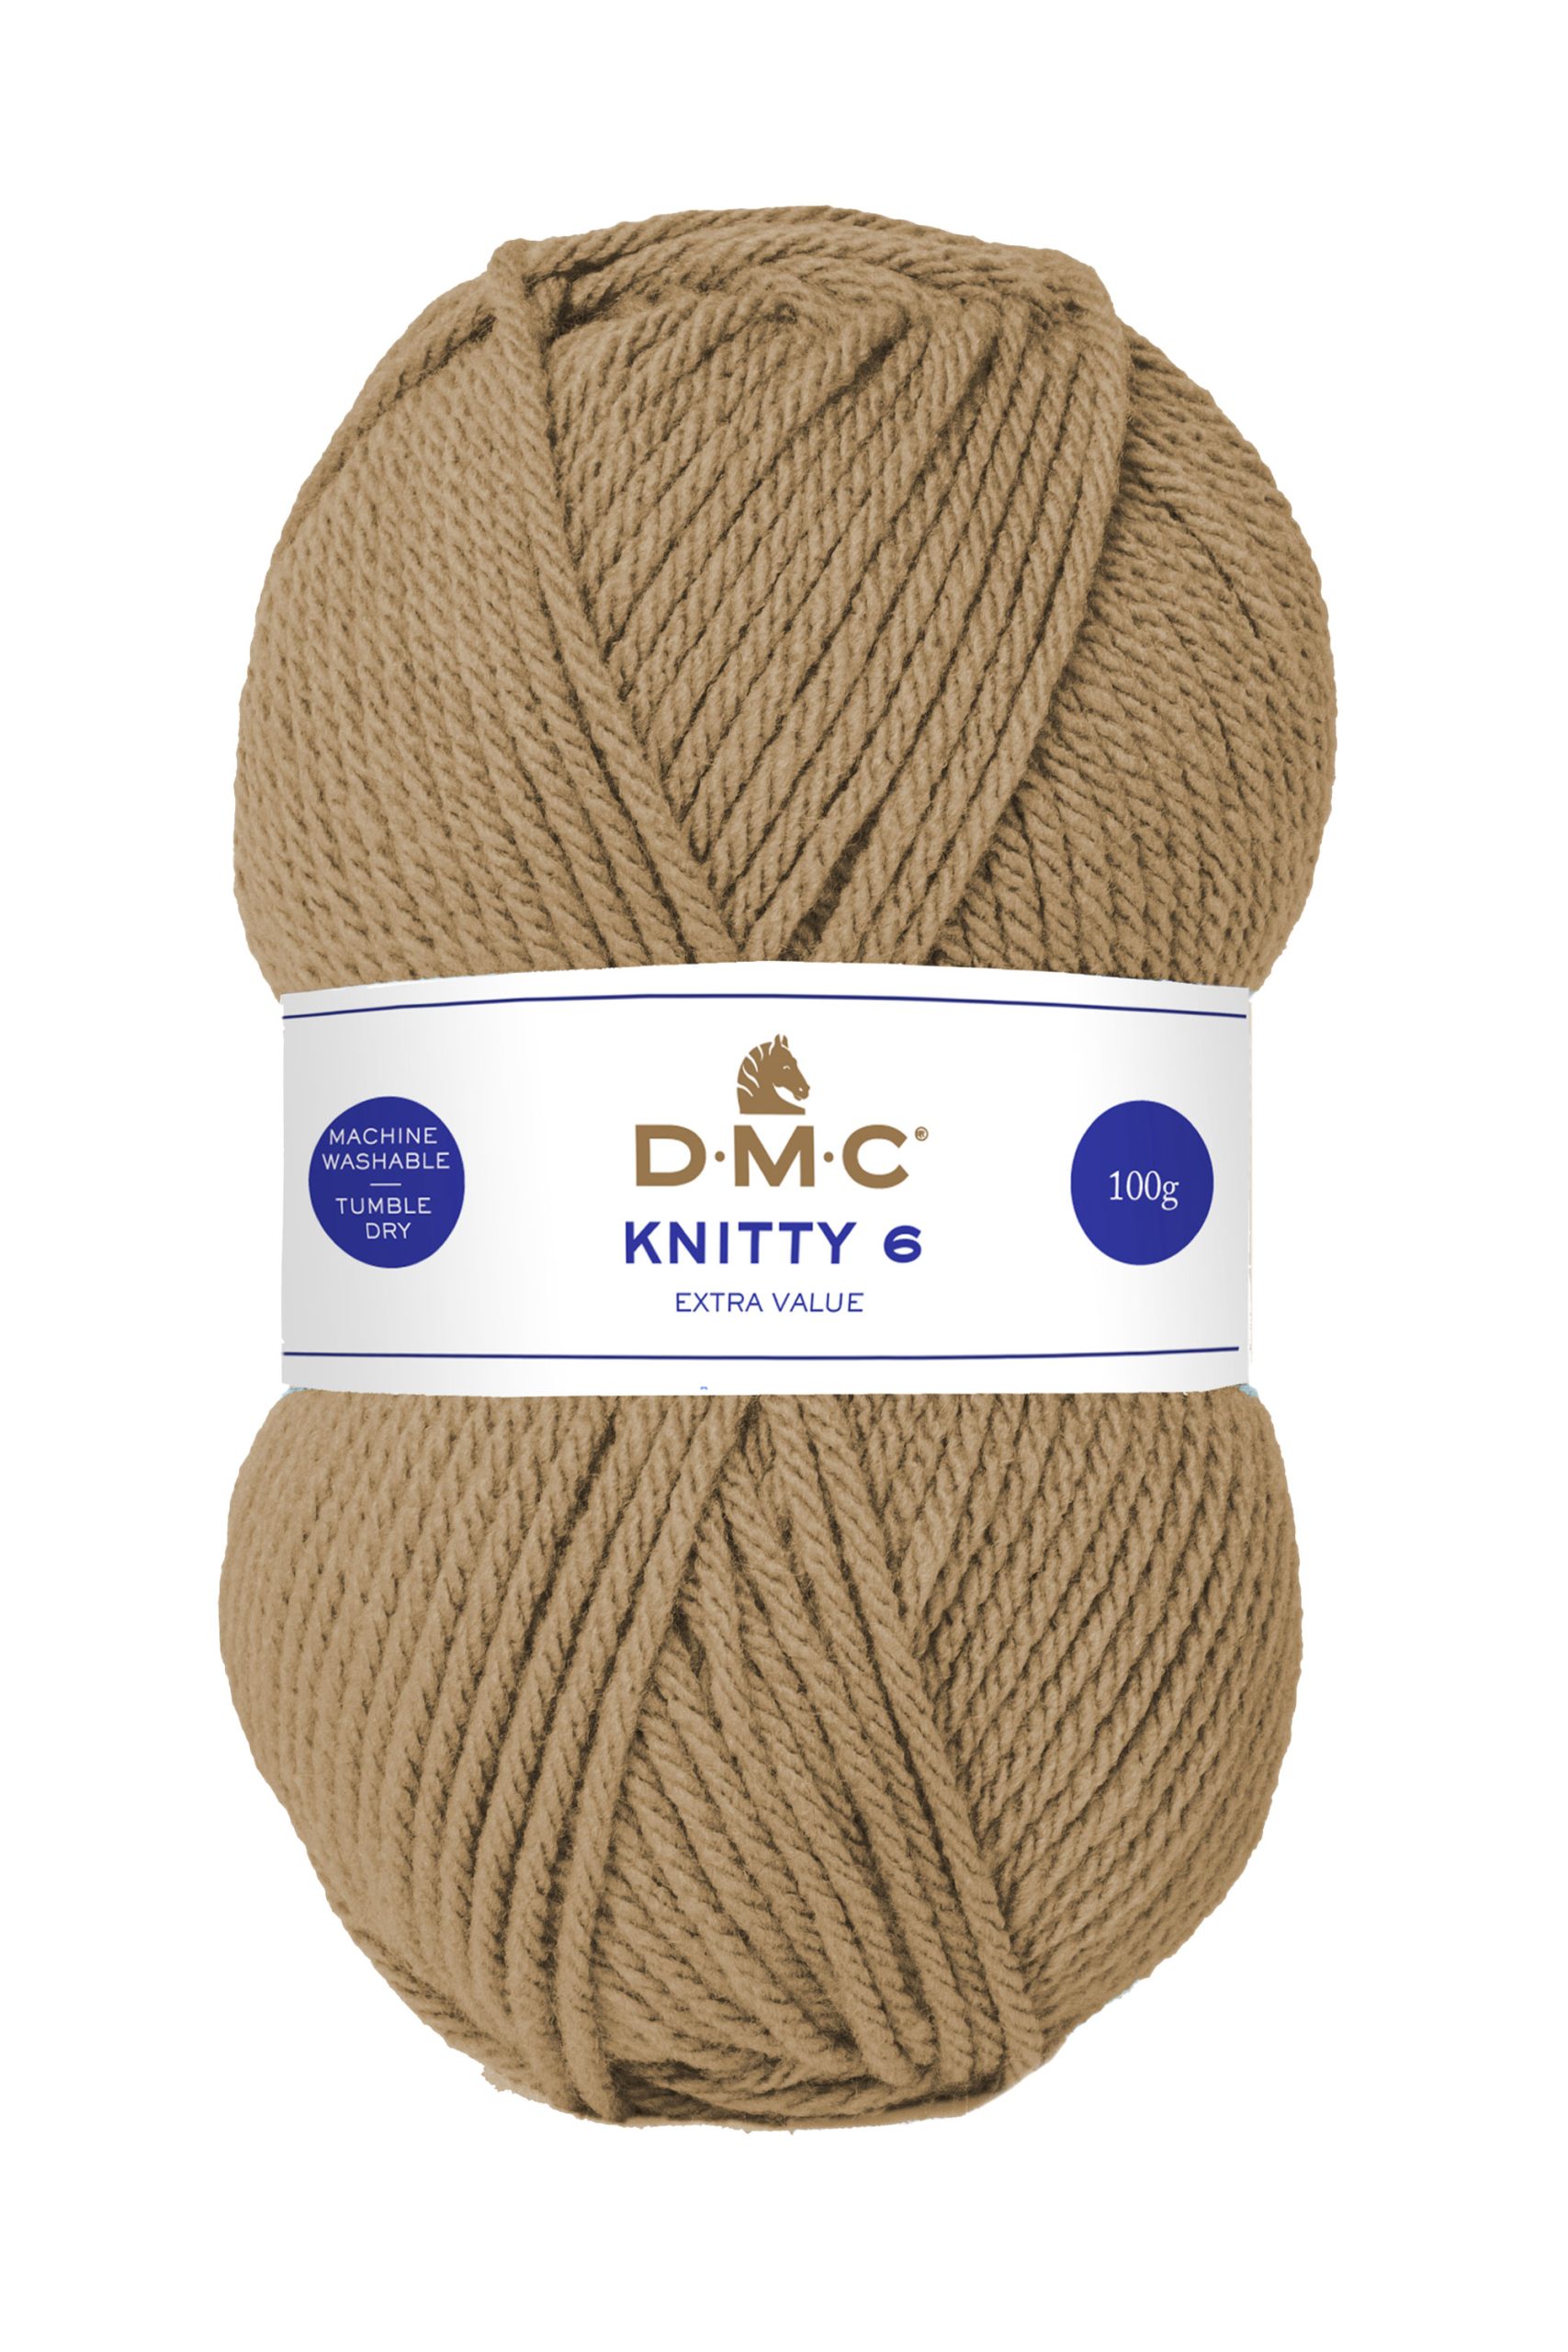 Lana Dmc Knitty 6 Colore 927